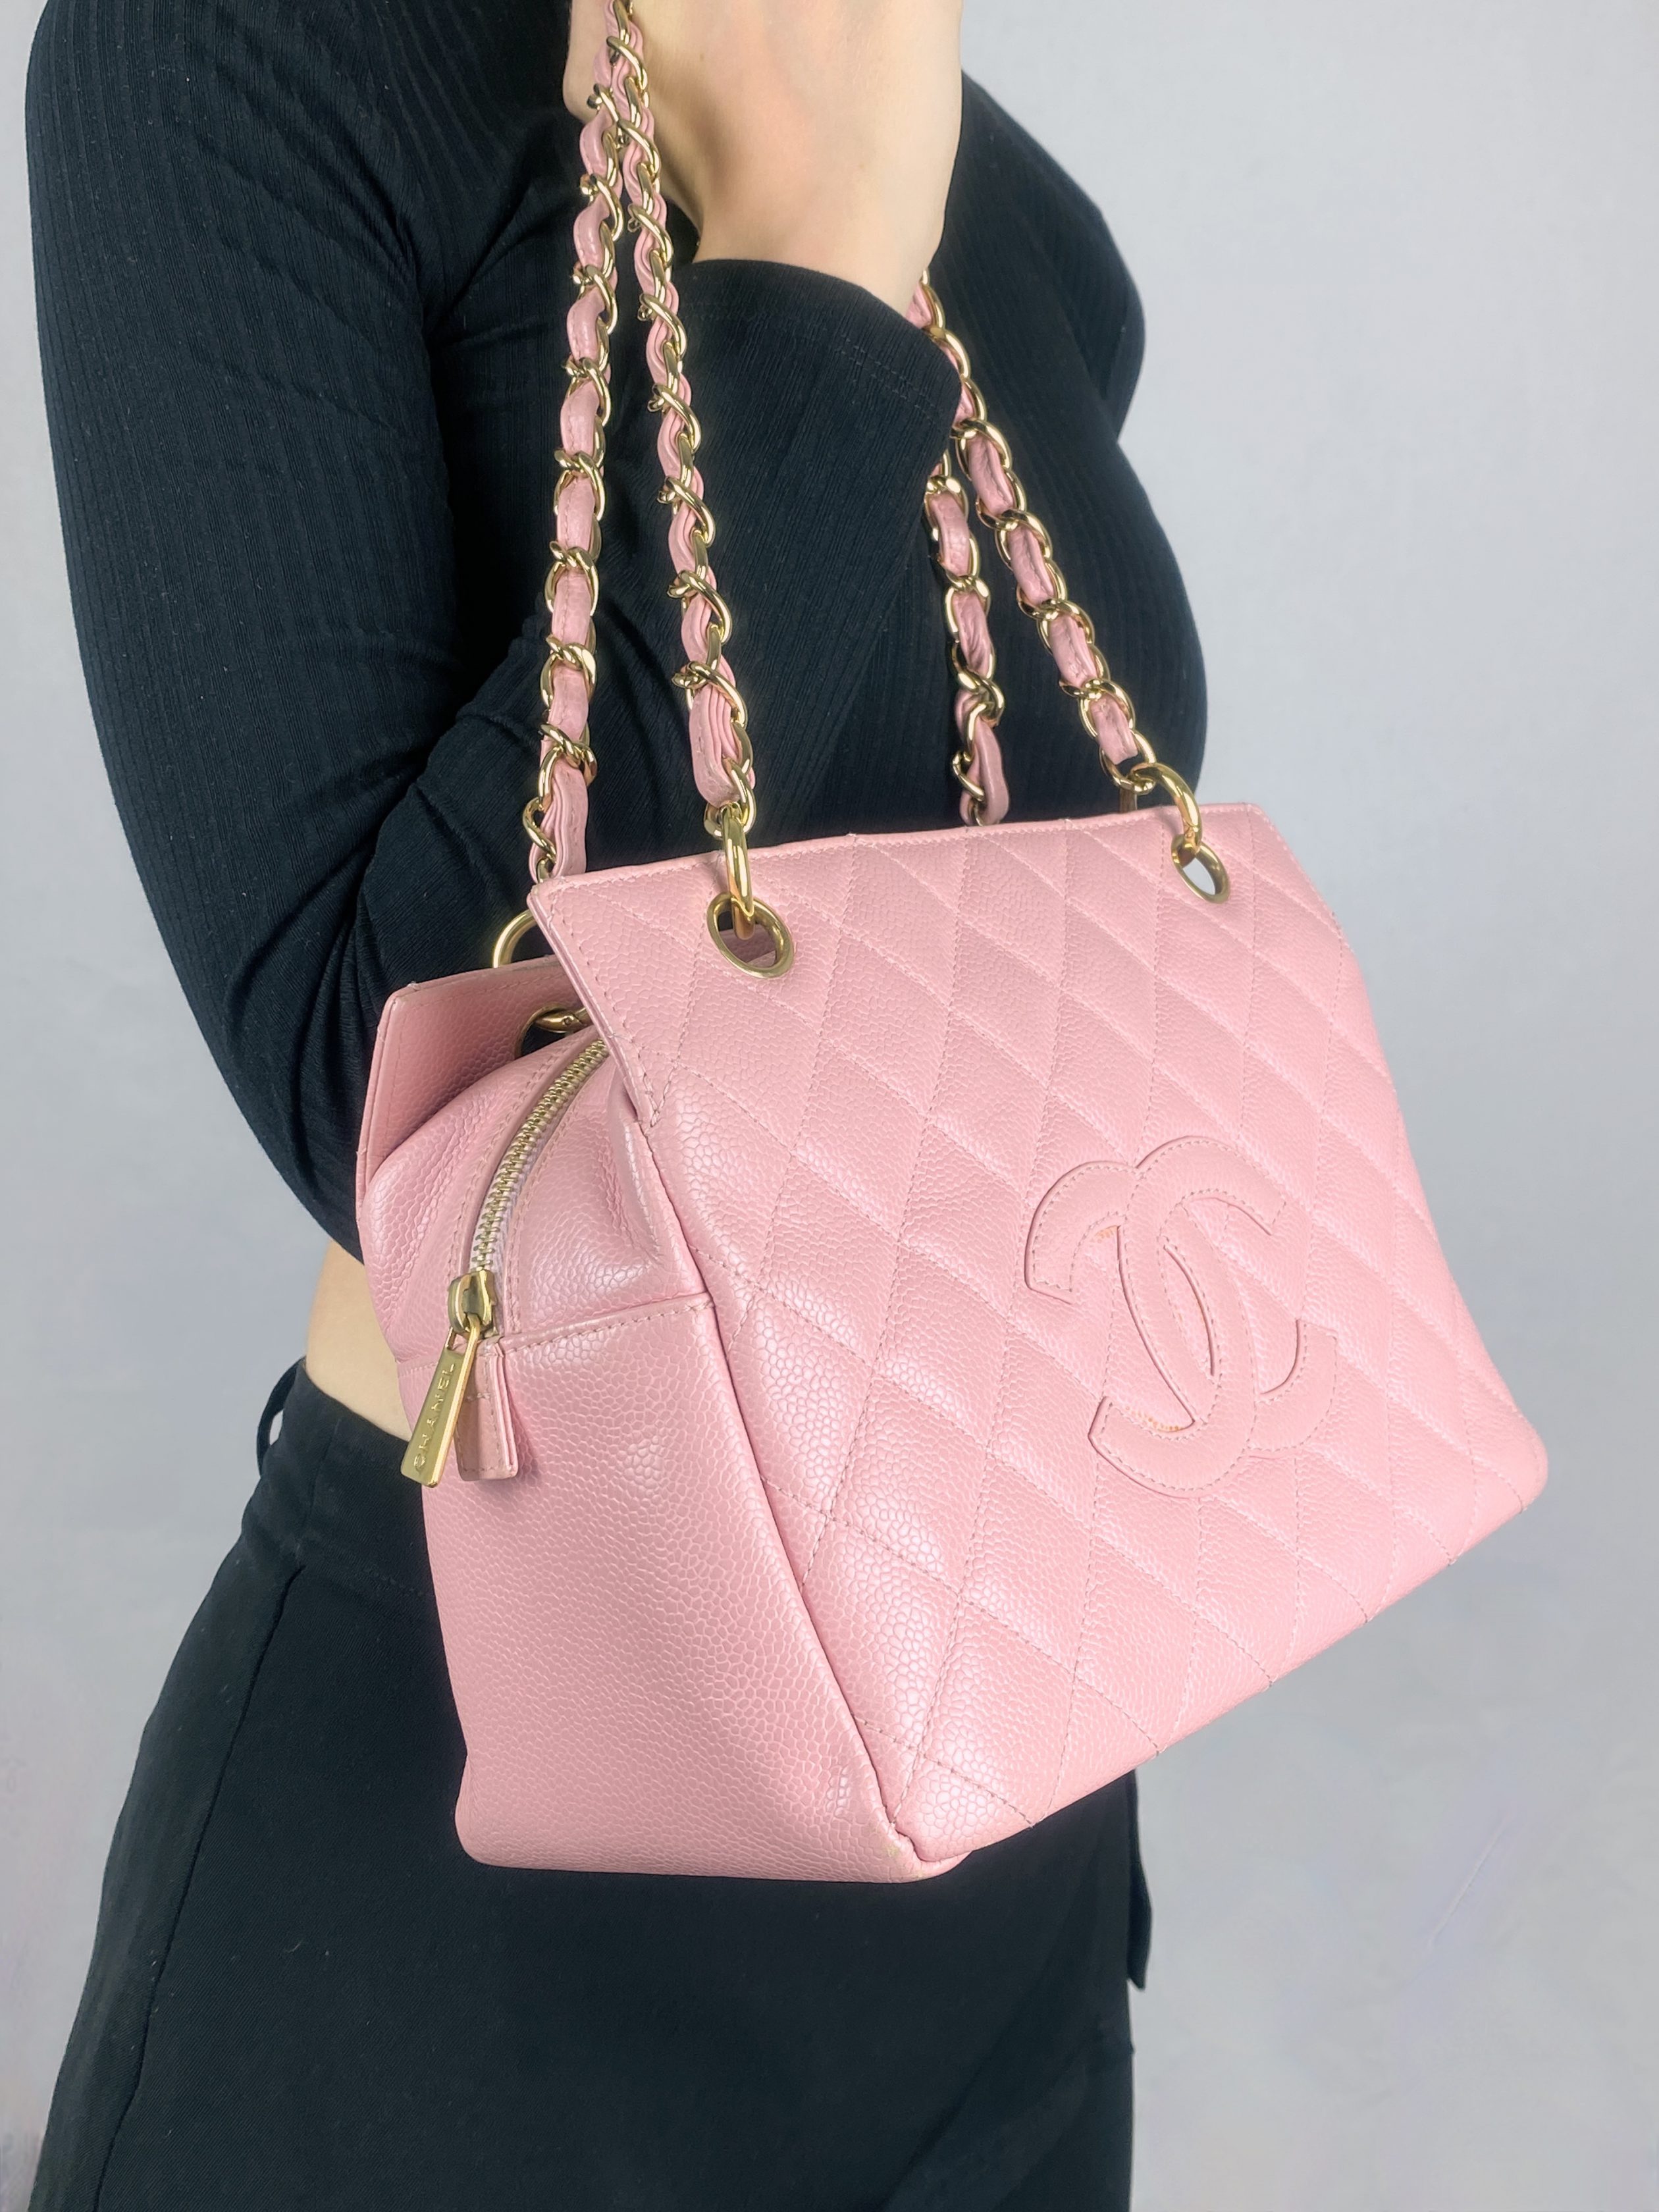 Chanel Pink Caviar Petite Timeless Shopper Tote PTT Bag 24k GHW